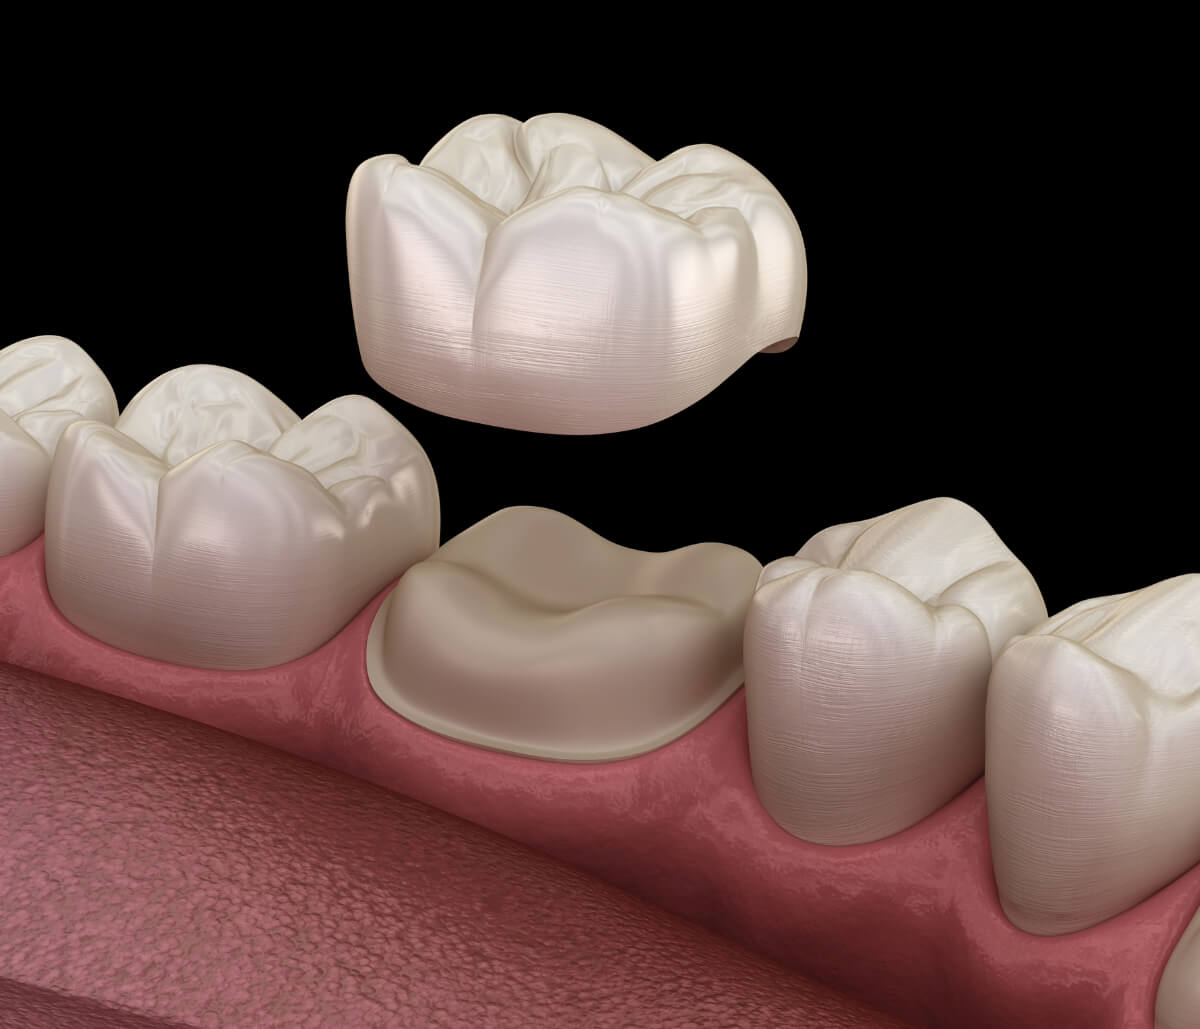 Dental Crowns on Front Teeth in Kirkland WA area